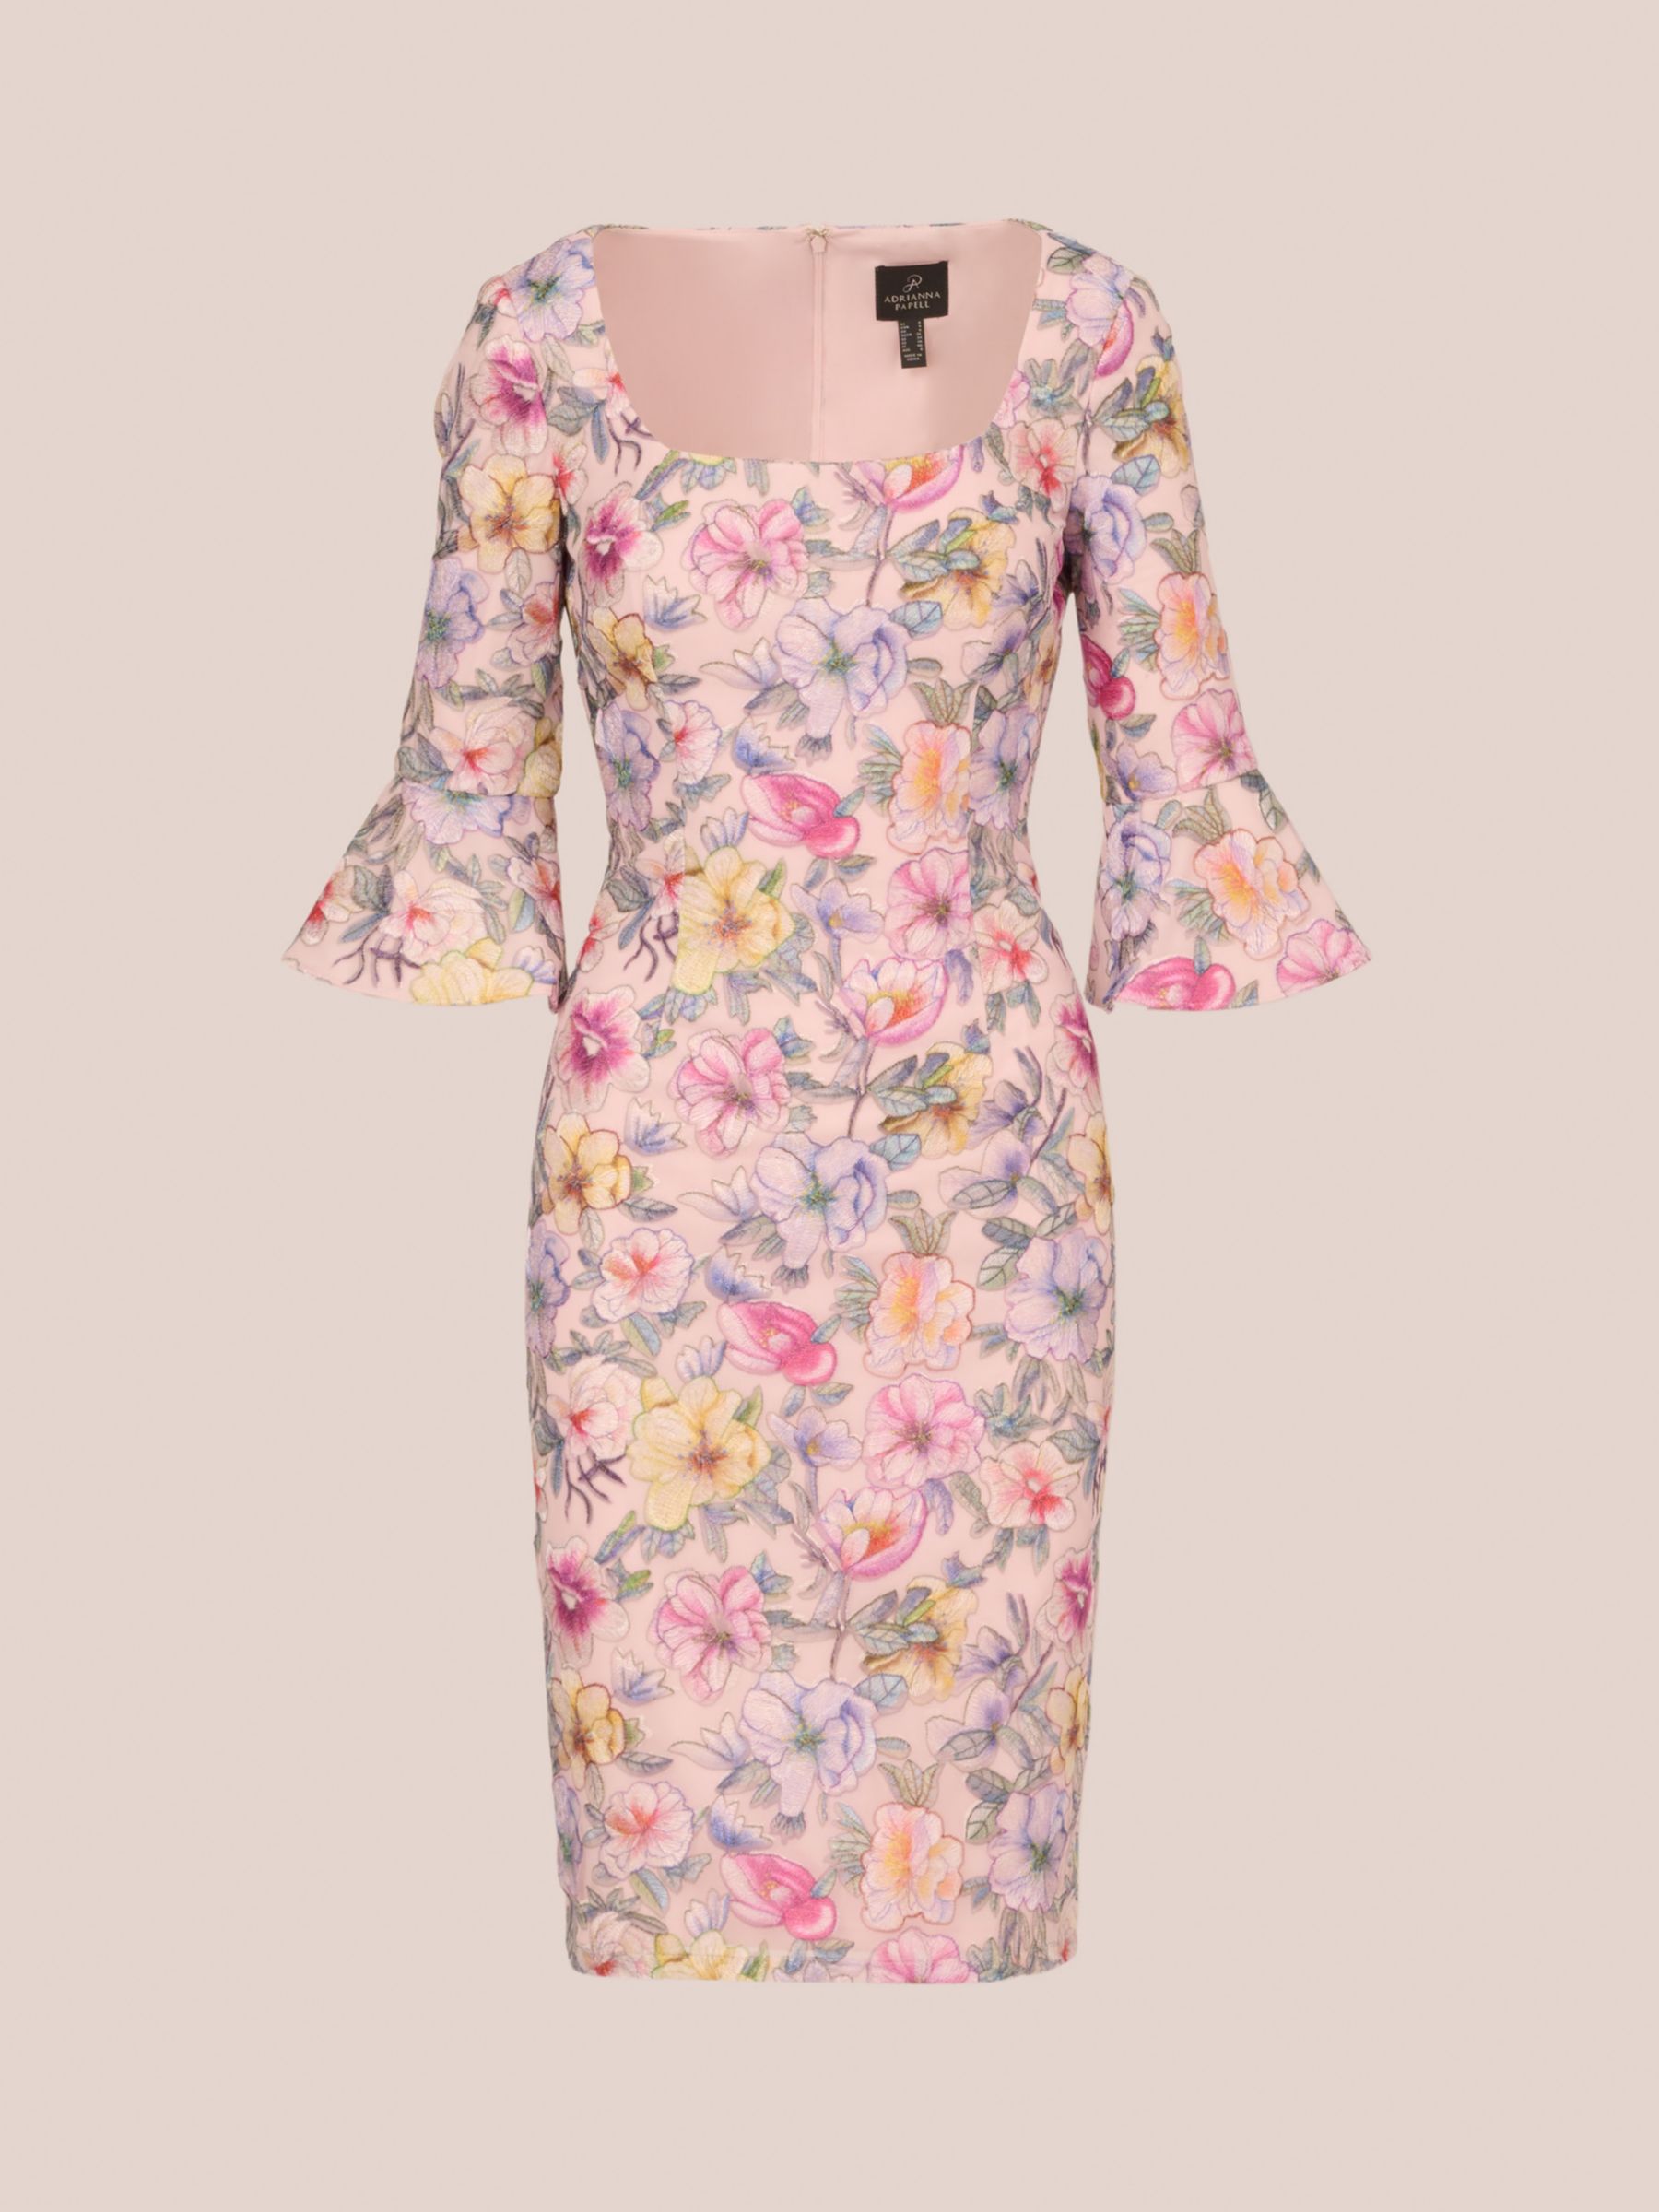 Adrianna Papell Floral Knee Length Dress, Blush/Multi, 6